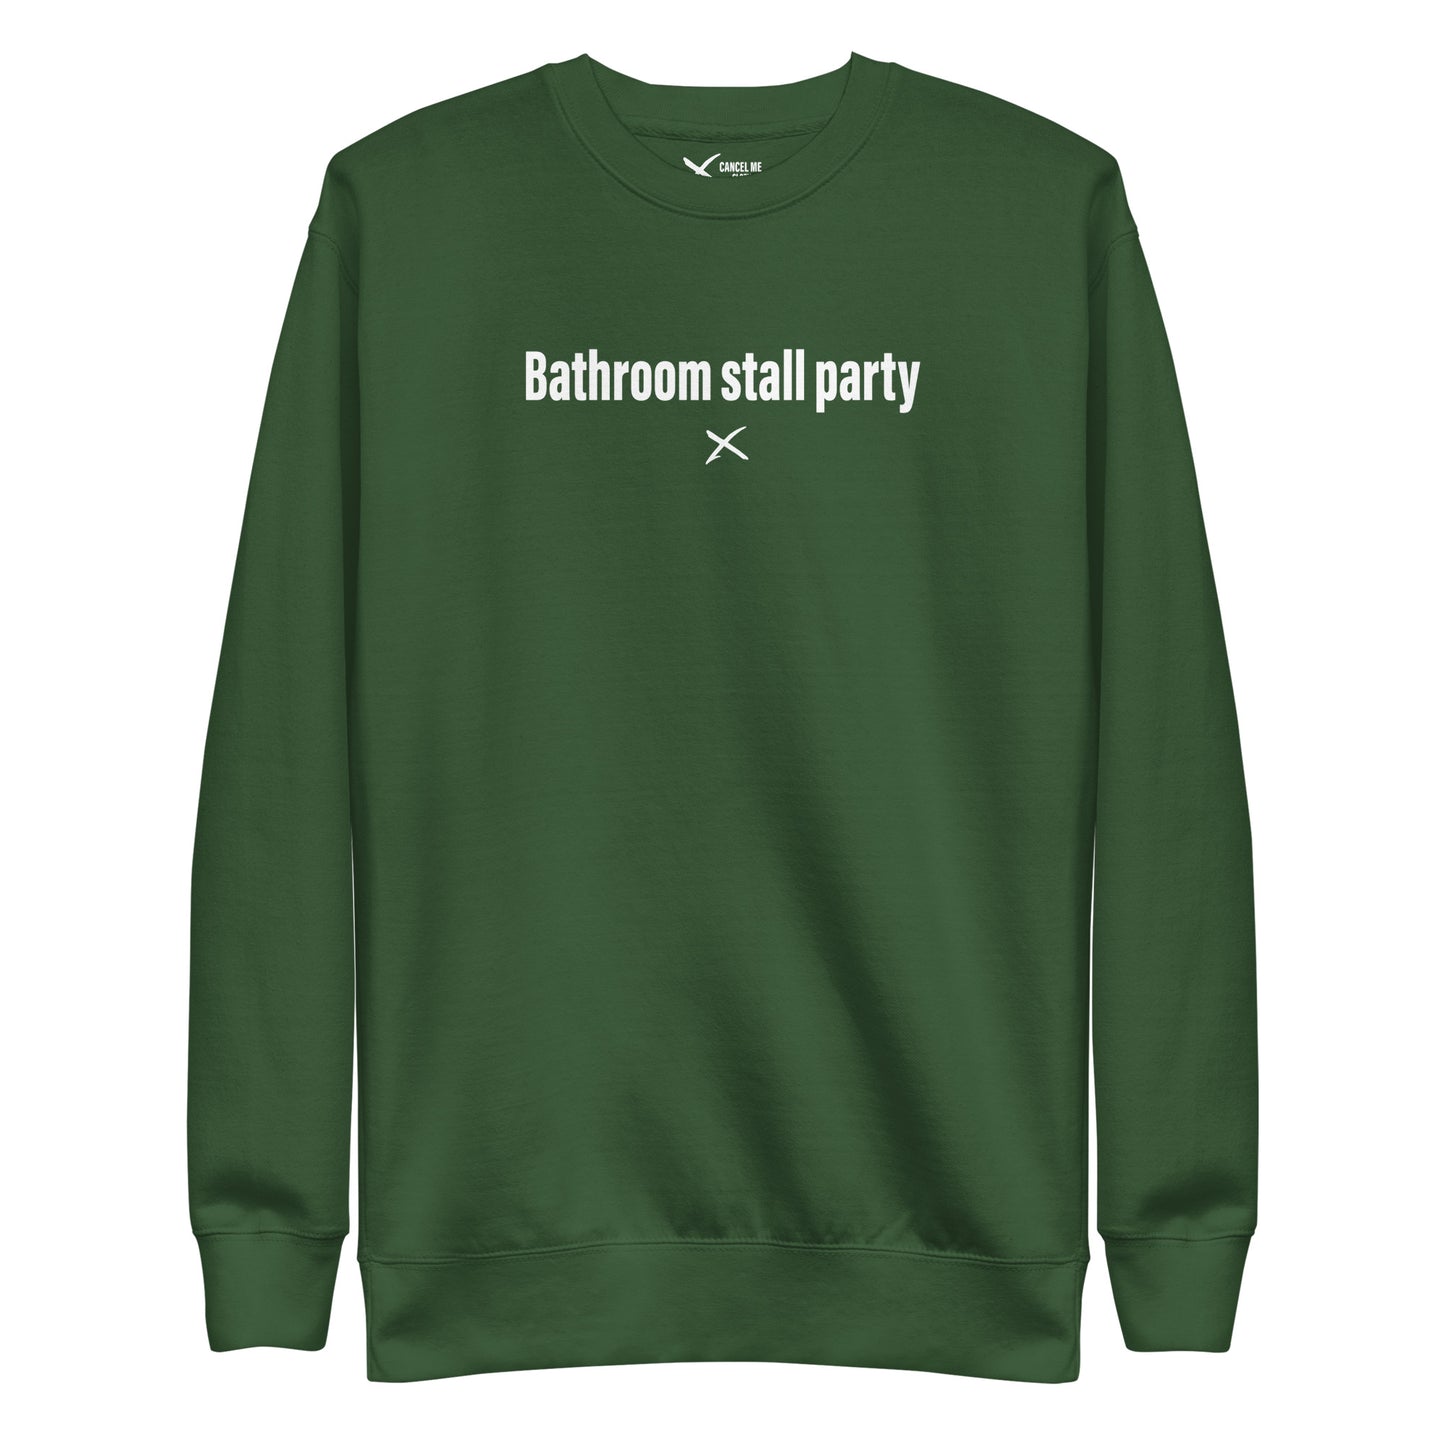 Bathroom stall party - Sweatshirt